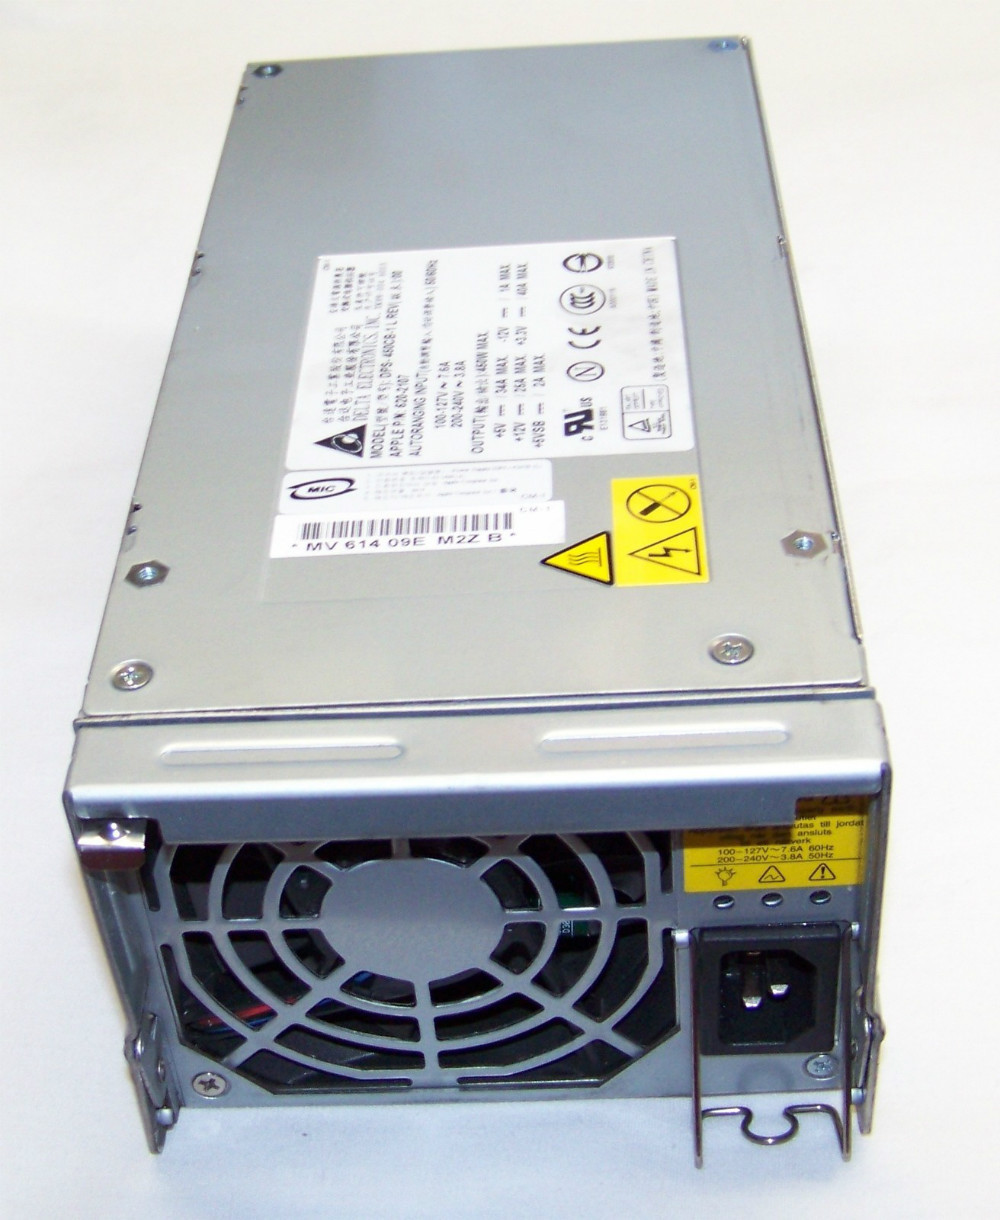 Apple Raid Server Power Supply 620-2107 Delta DPS-450CB-1 450W RT